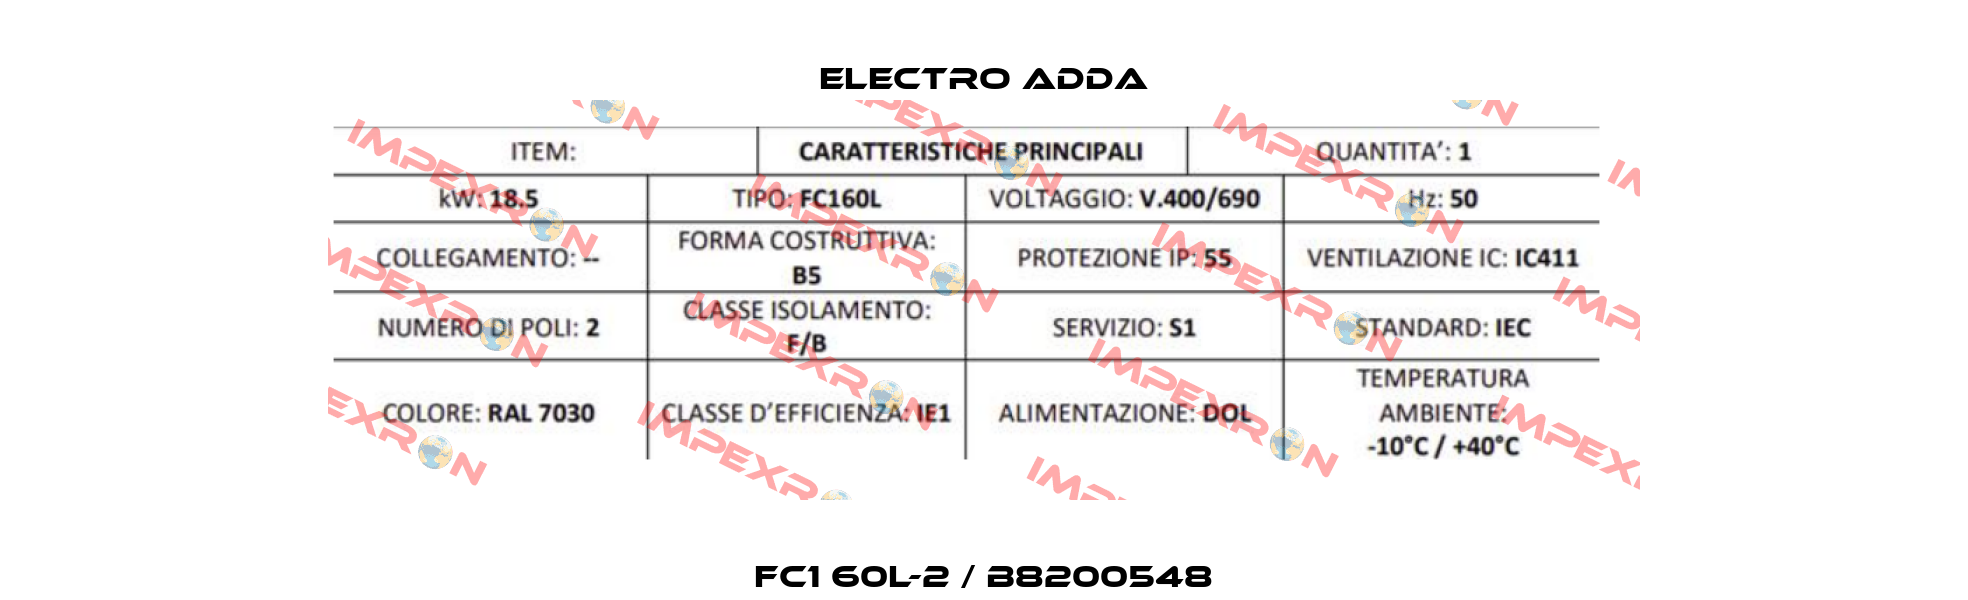 FC1 60L-2 / B8200548 Electro Adda